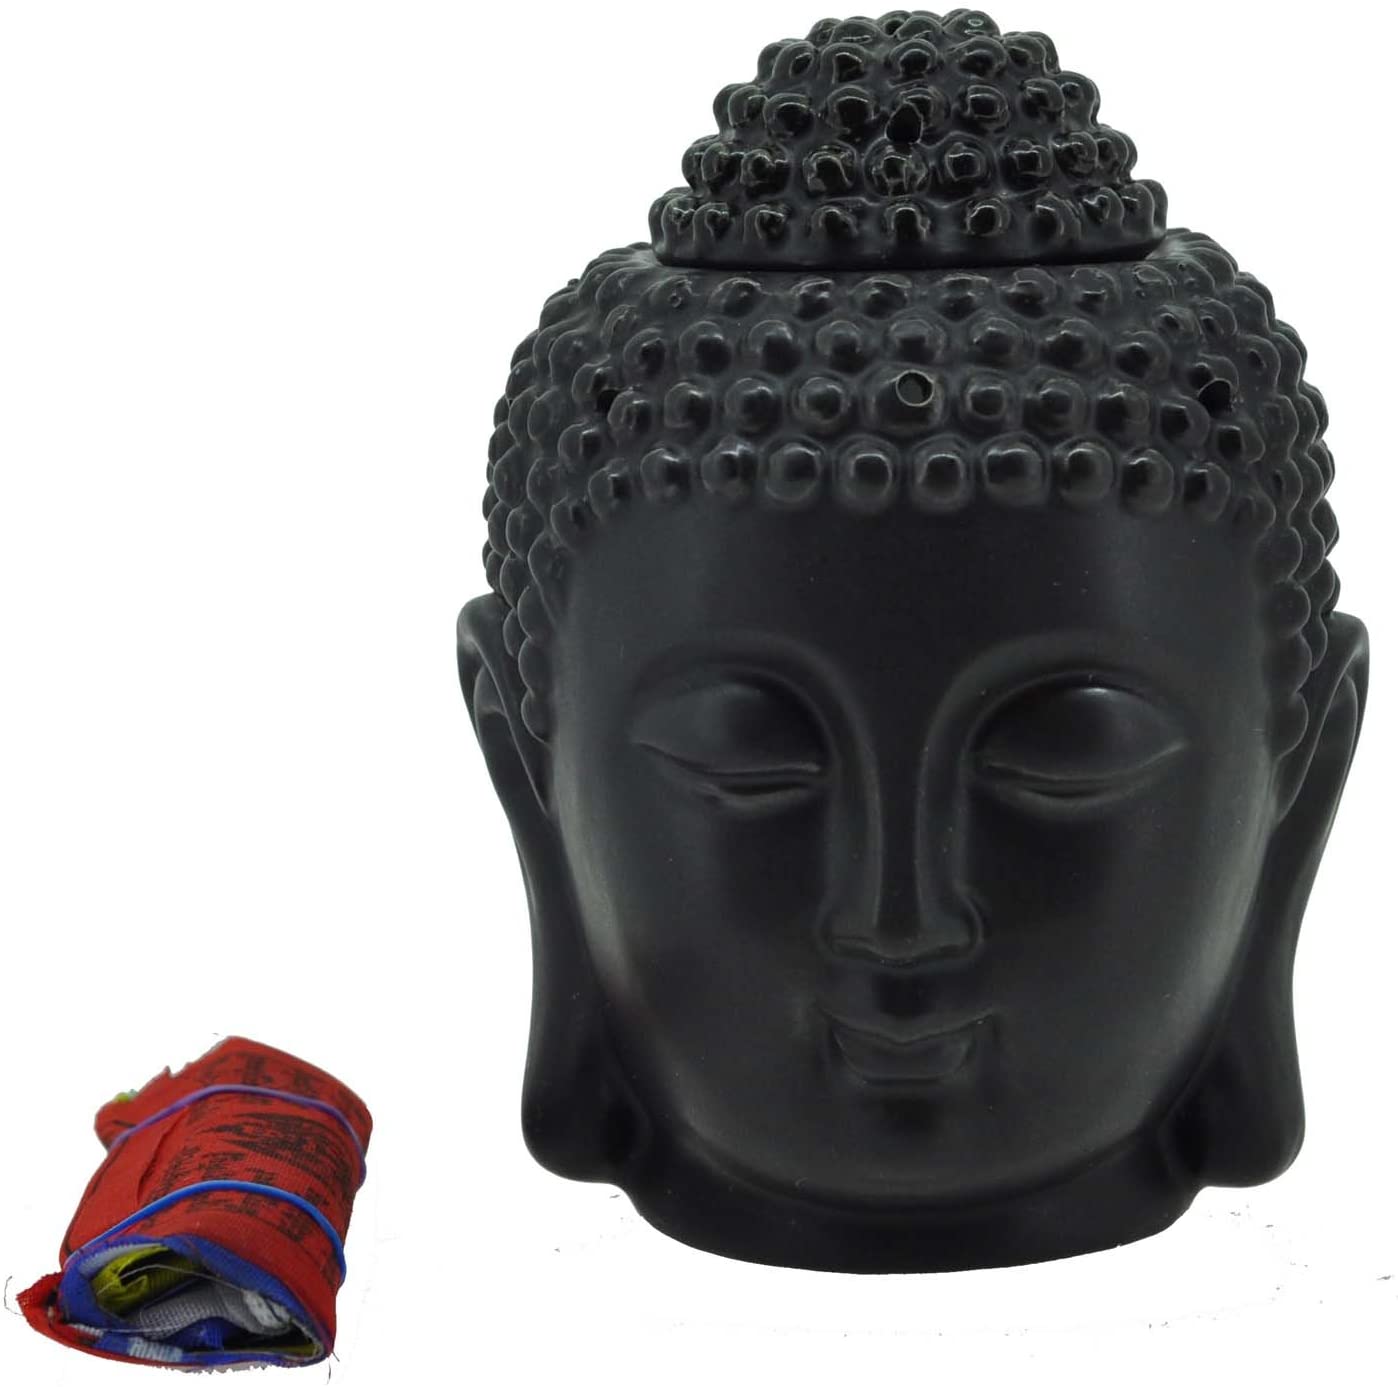 Mandala Crafts Porcelain Yoga Meditation Black Buddha Head Statue Oil Burner Aromatherapy Diffuser